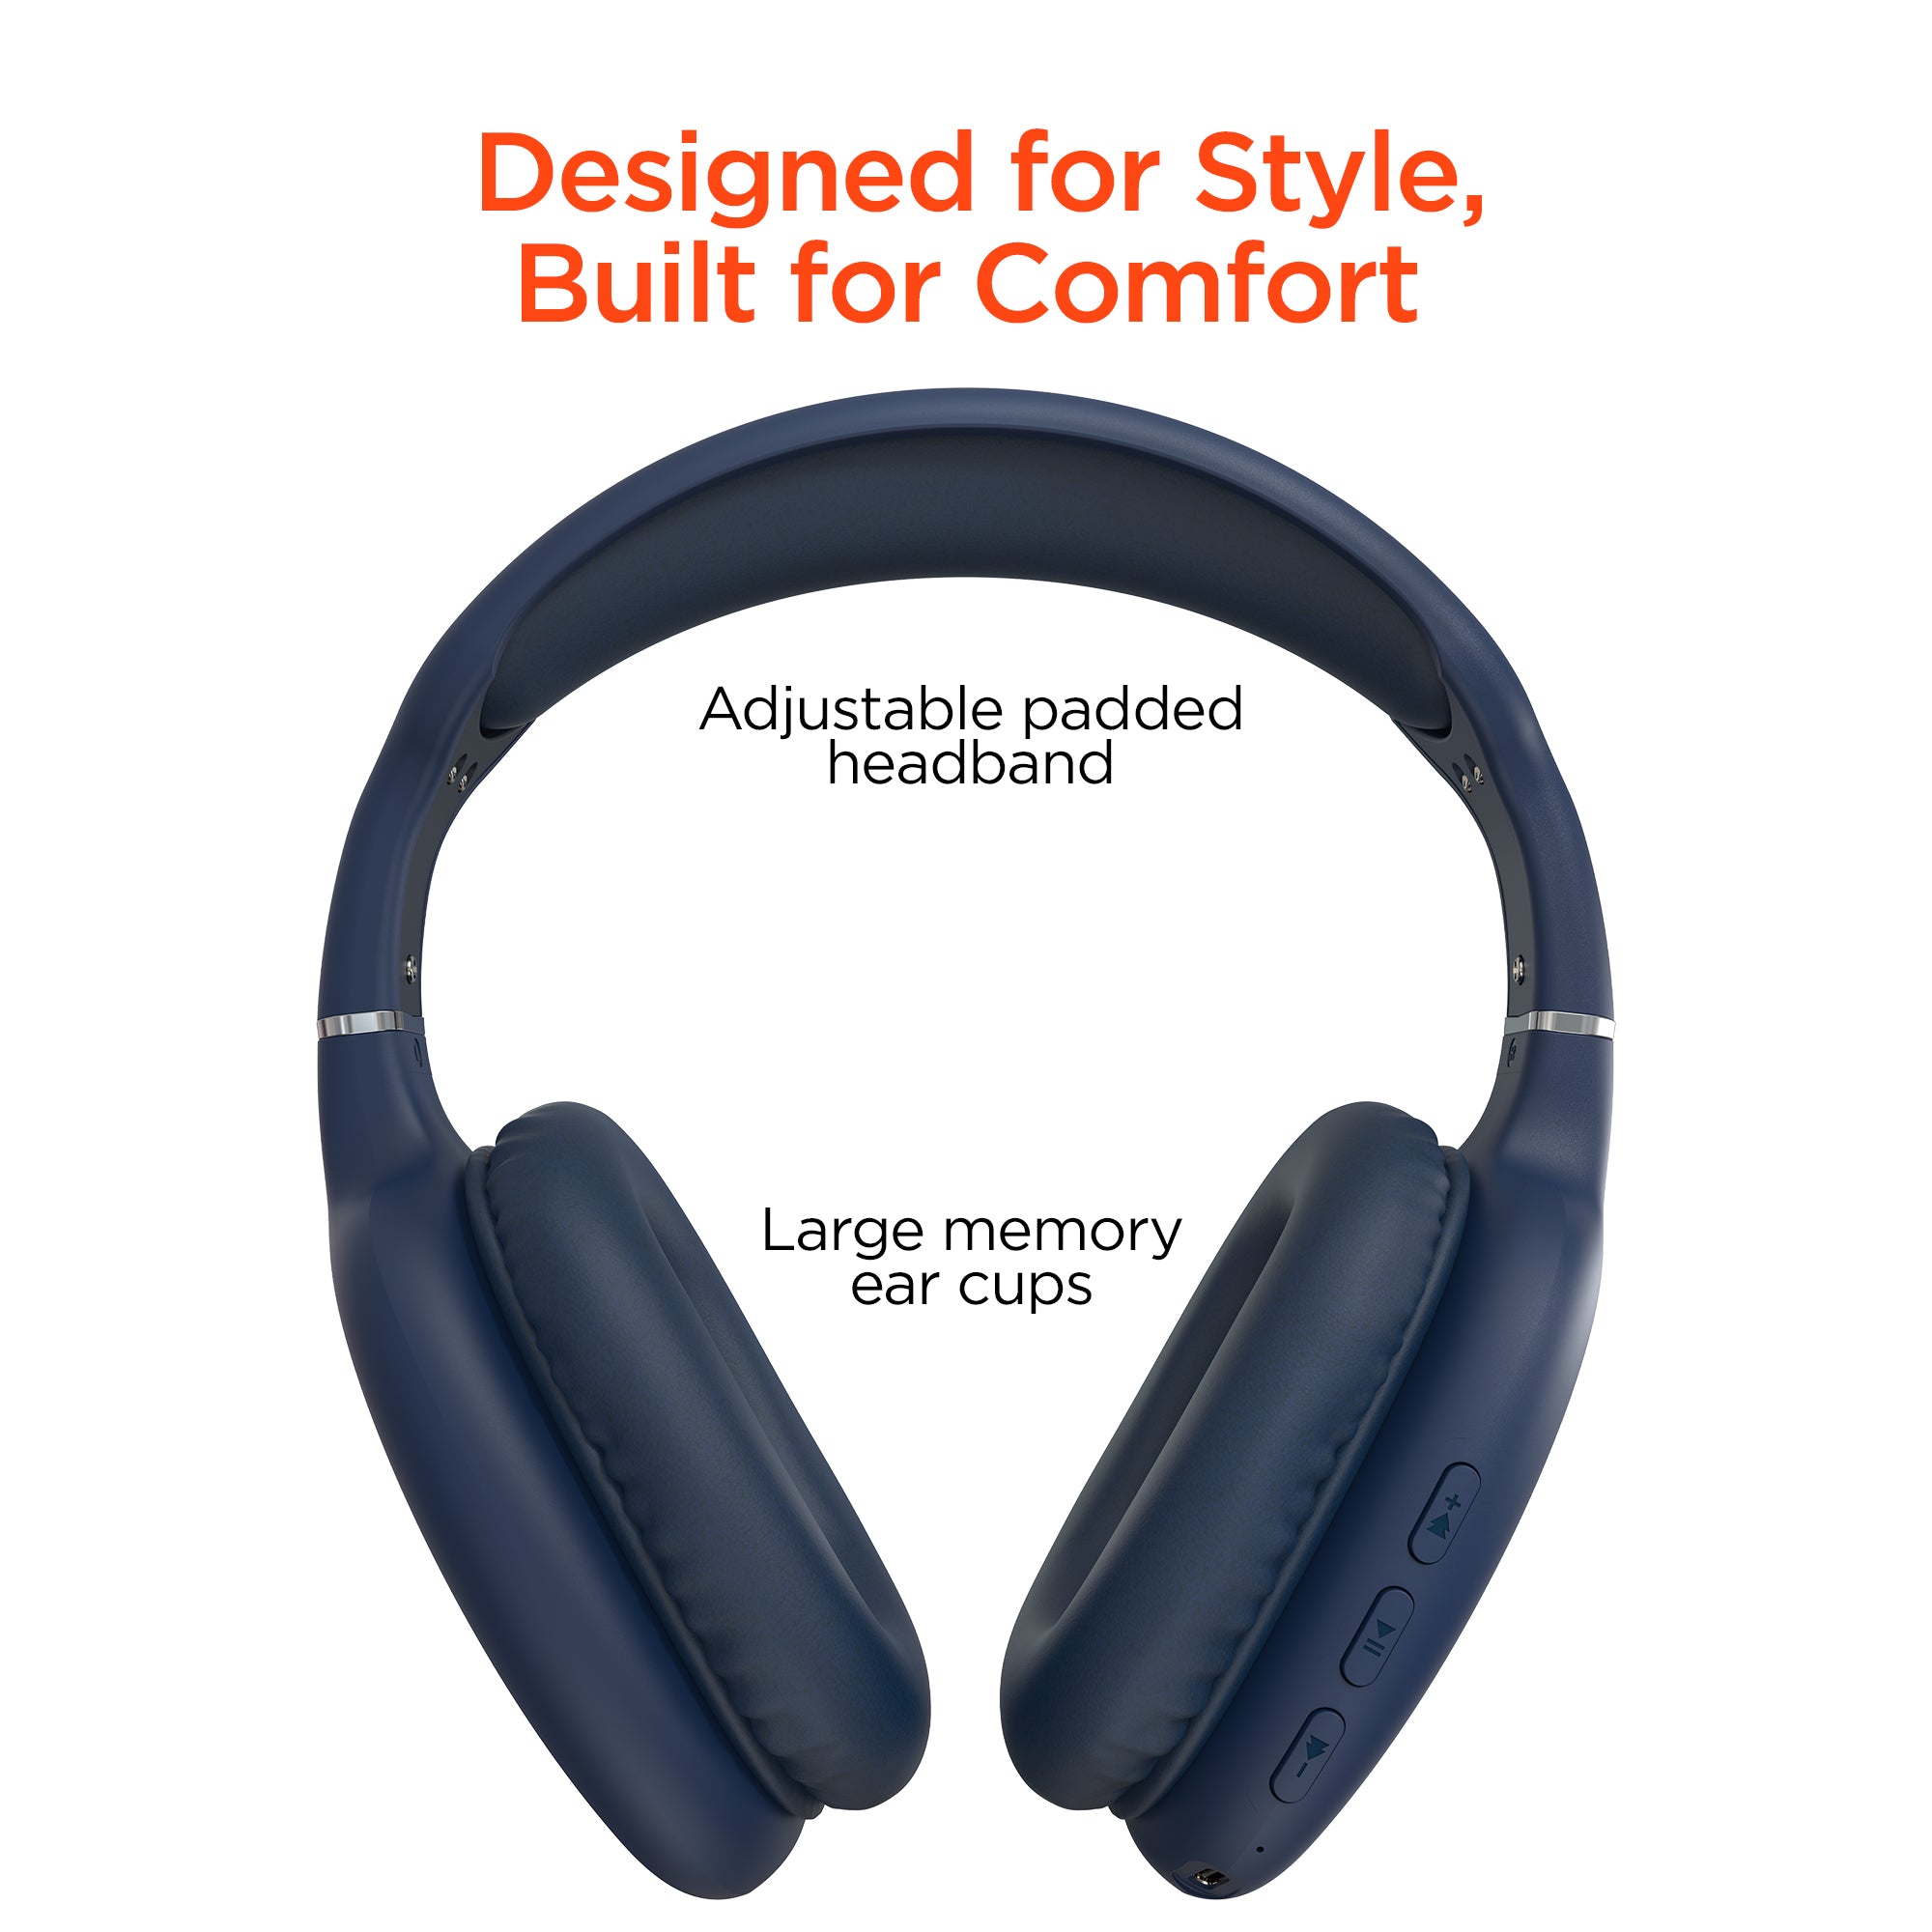 VIBE Wireless Headphones Blue